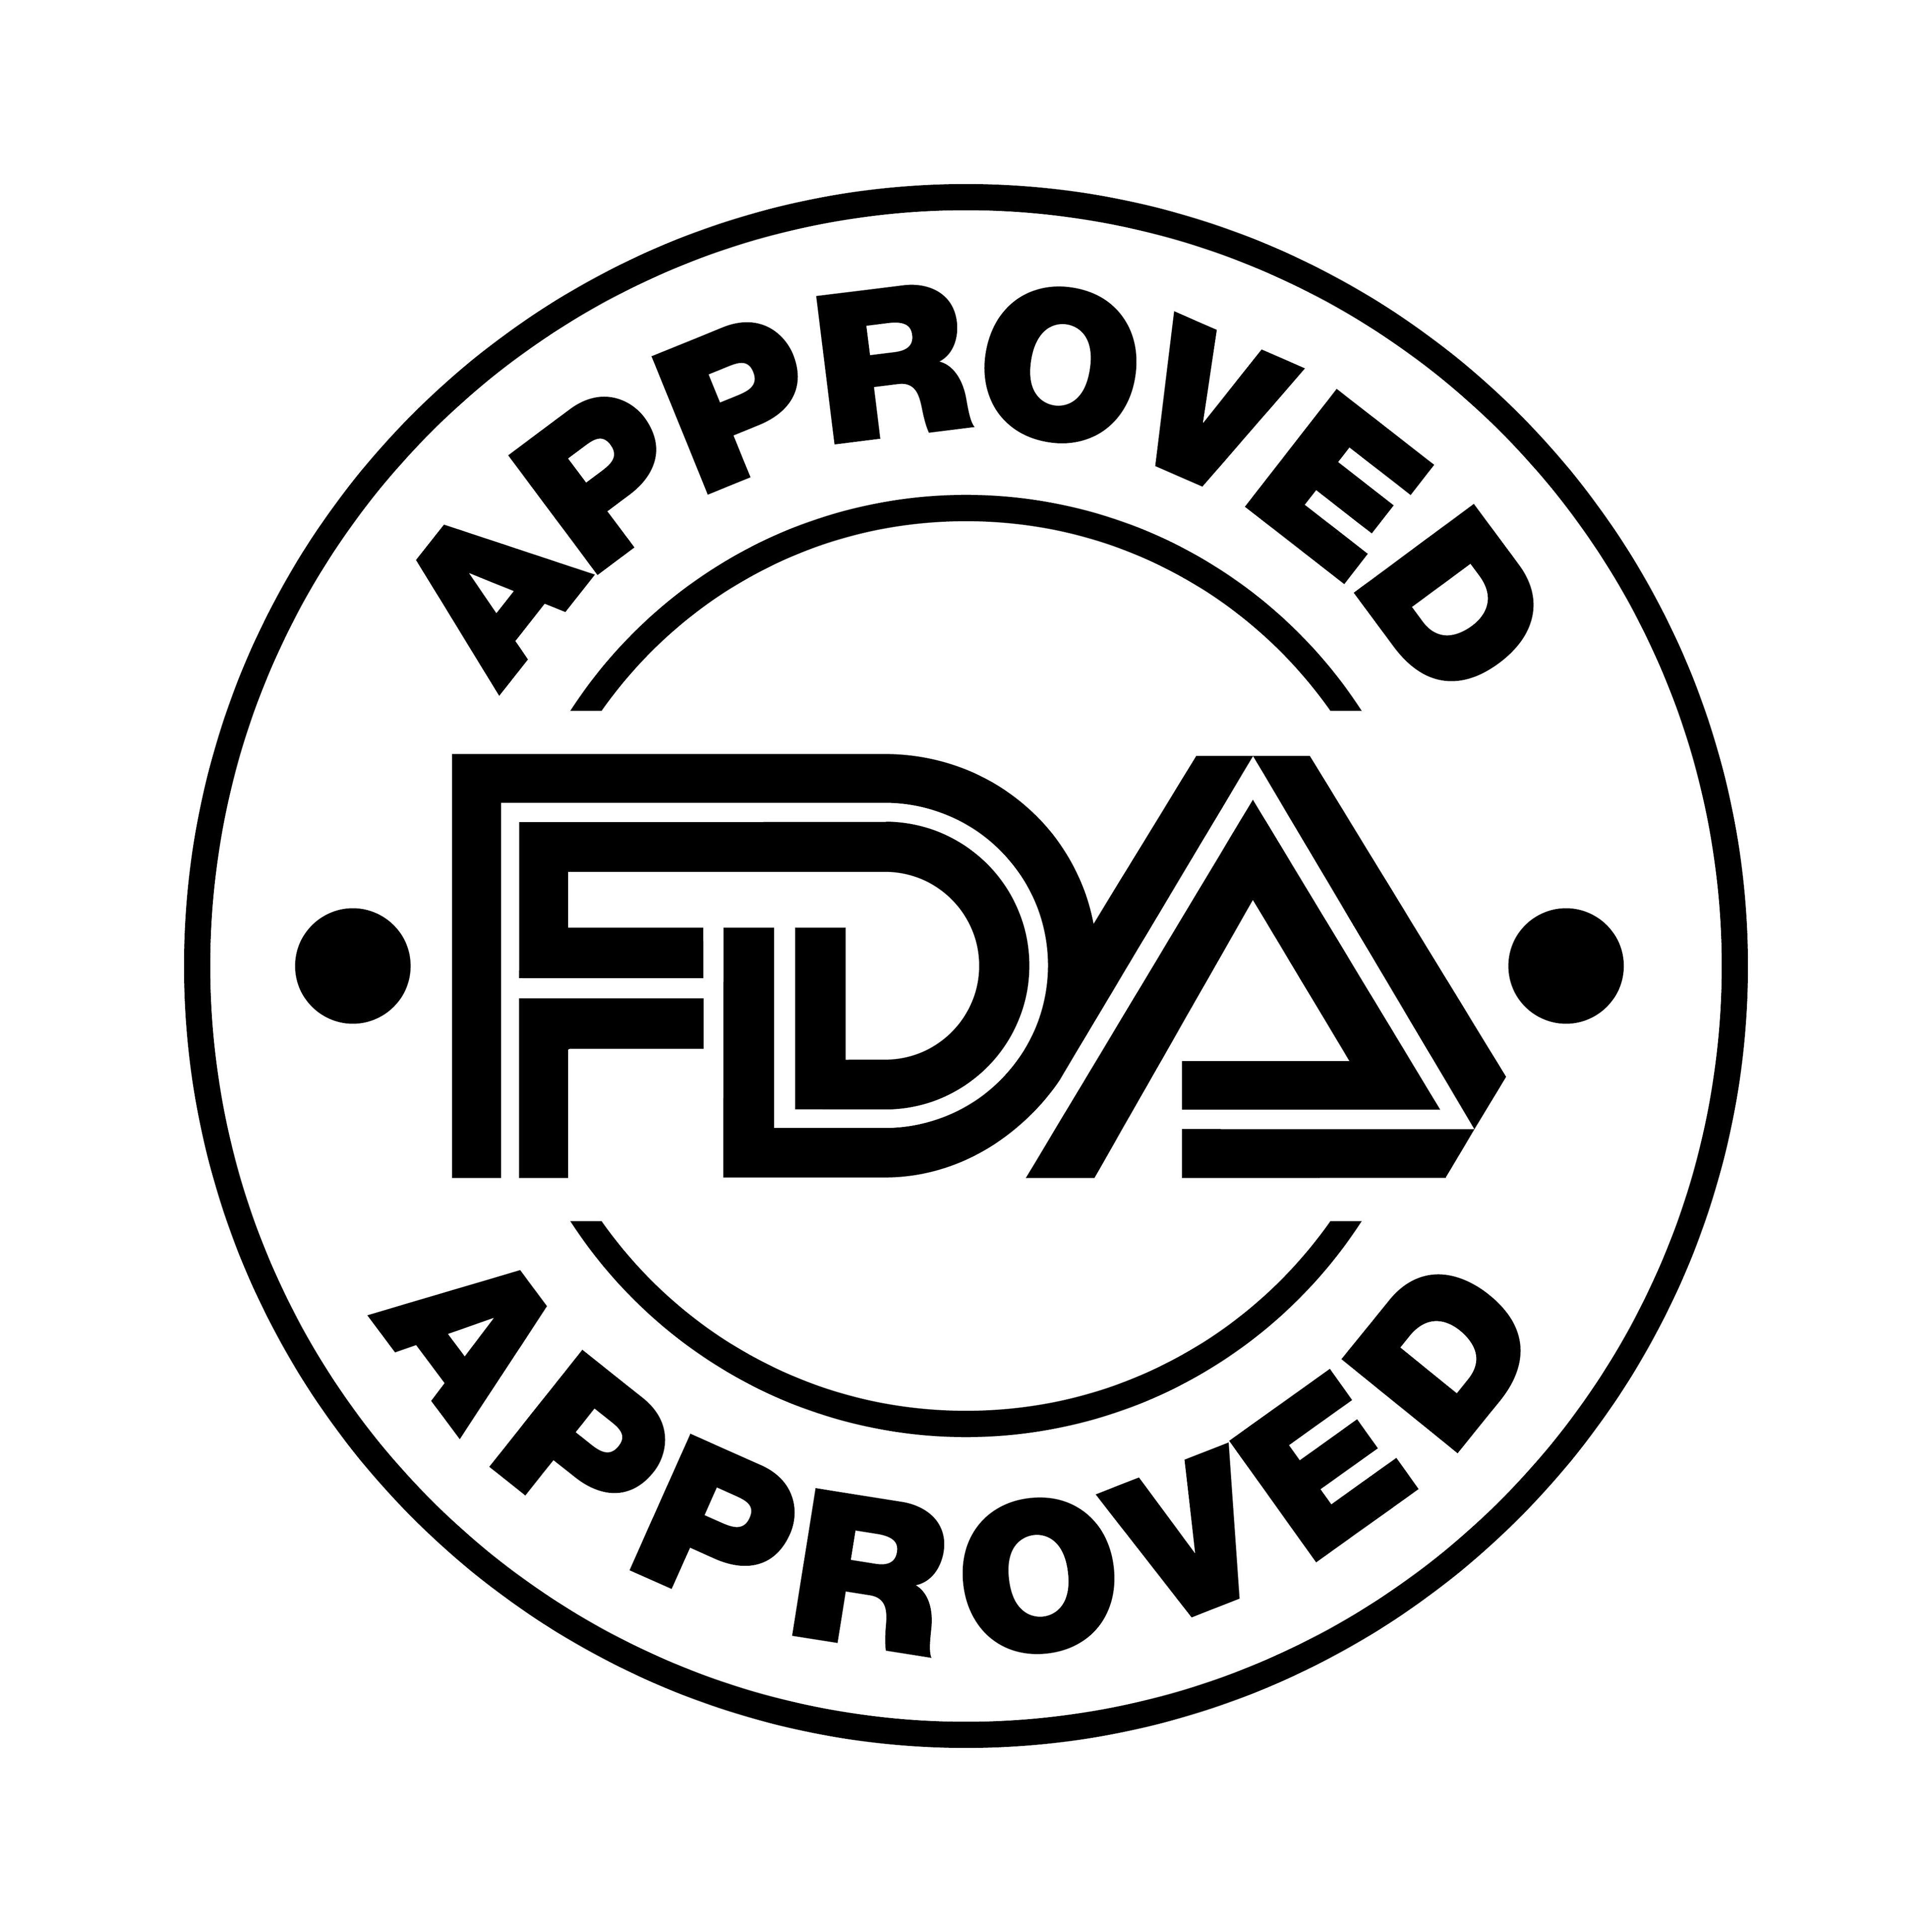 US FDA approved stamp